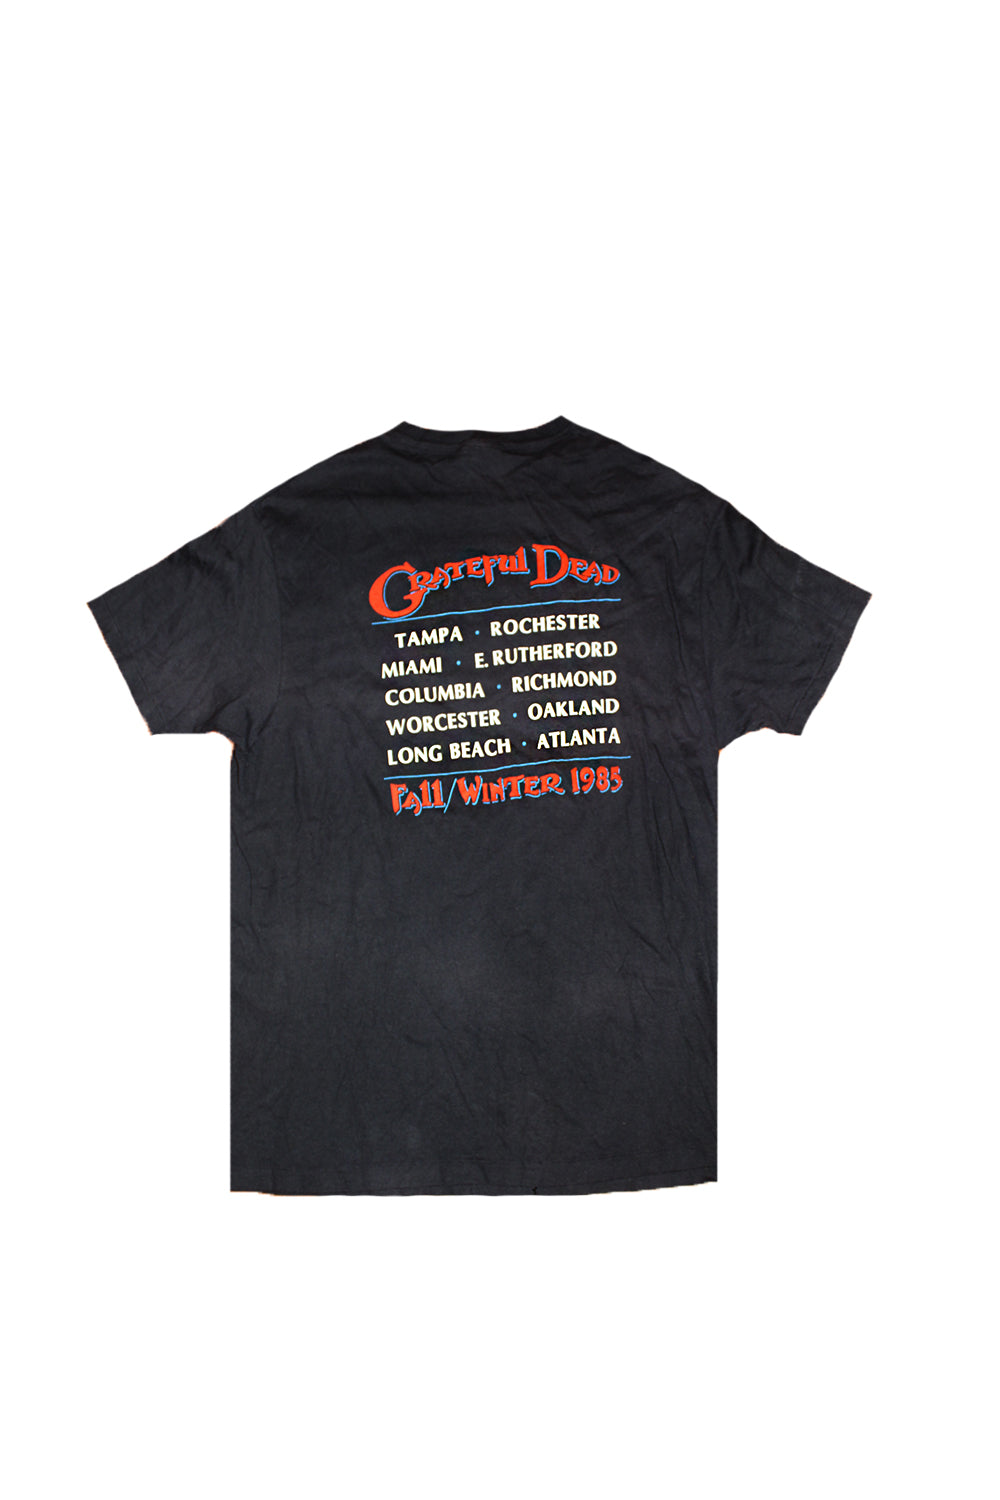 Vintage 80&#39;s Grateful Dead John Kinnard Art T-Shirt ///SOLD///